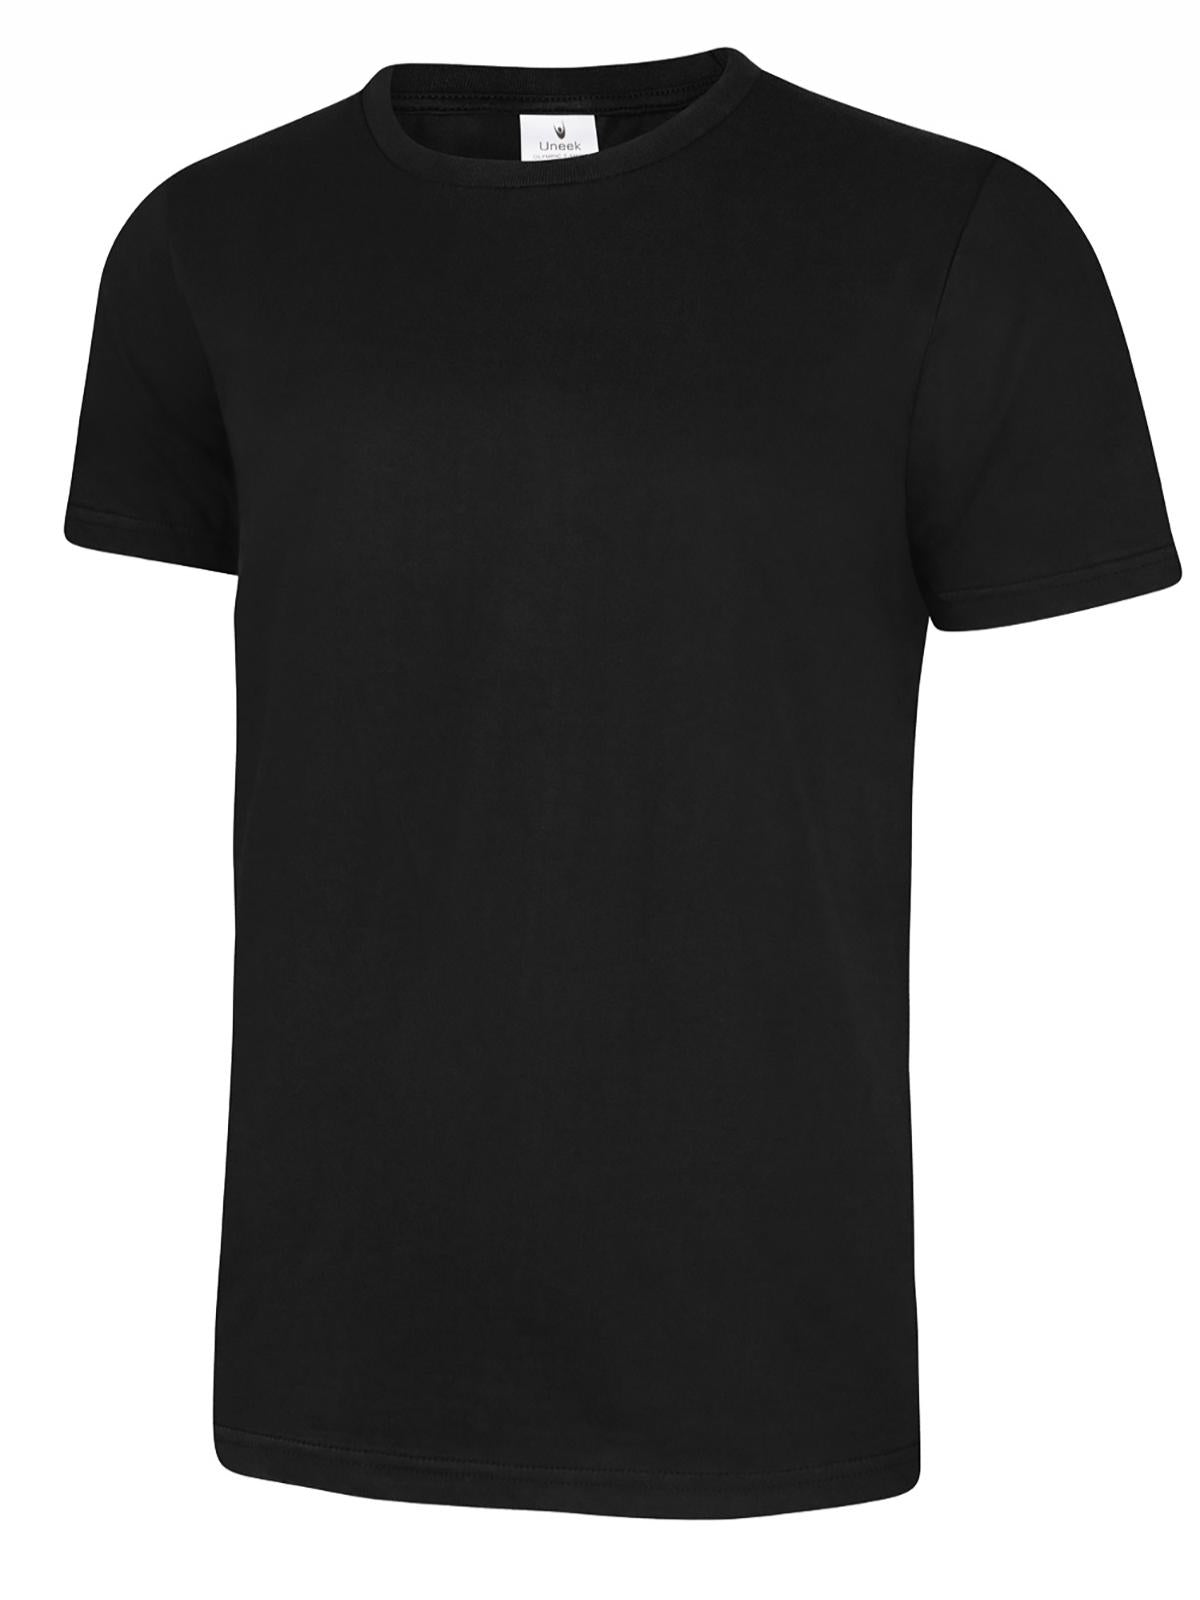 Uneek Olympic T-shirt UC320 - Black